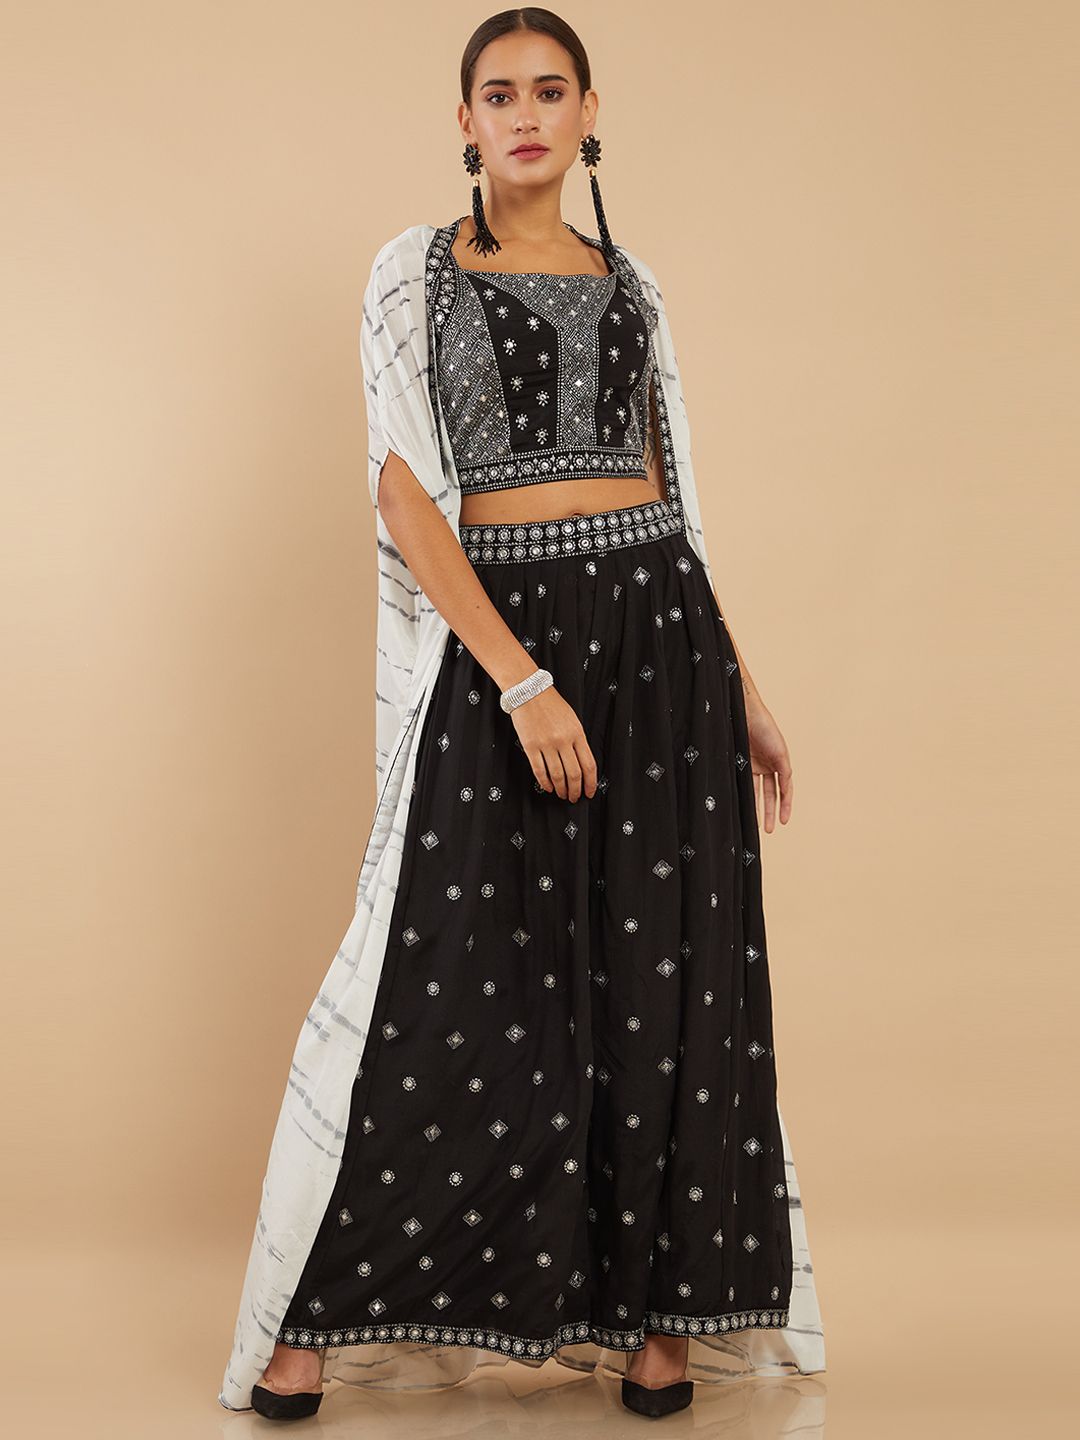 Soch Black & White Embellished Silk Ready to Wear Lehenga Choli With Jacket Price in India